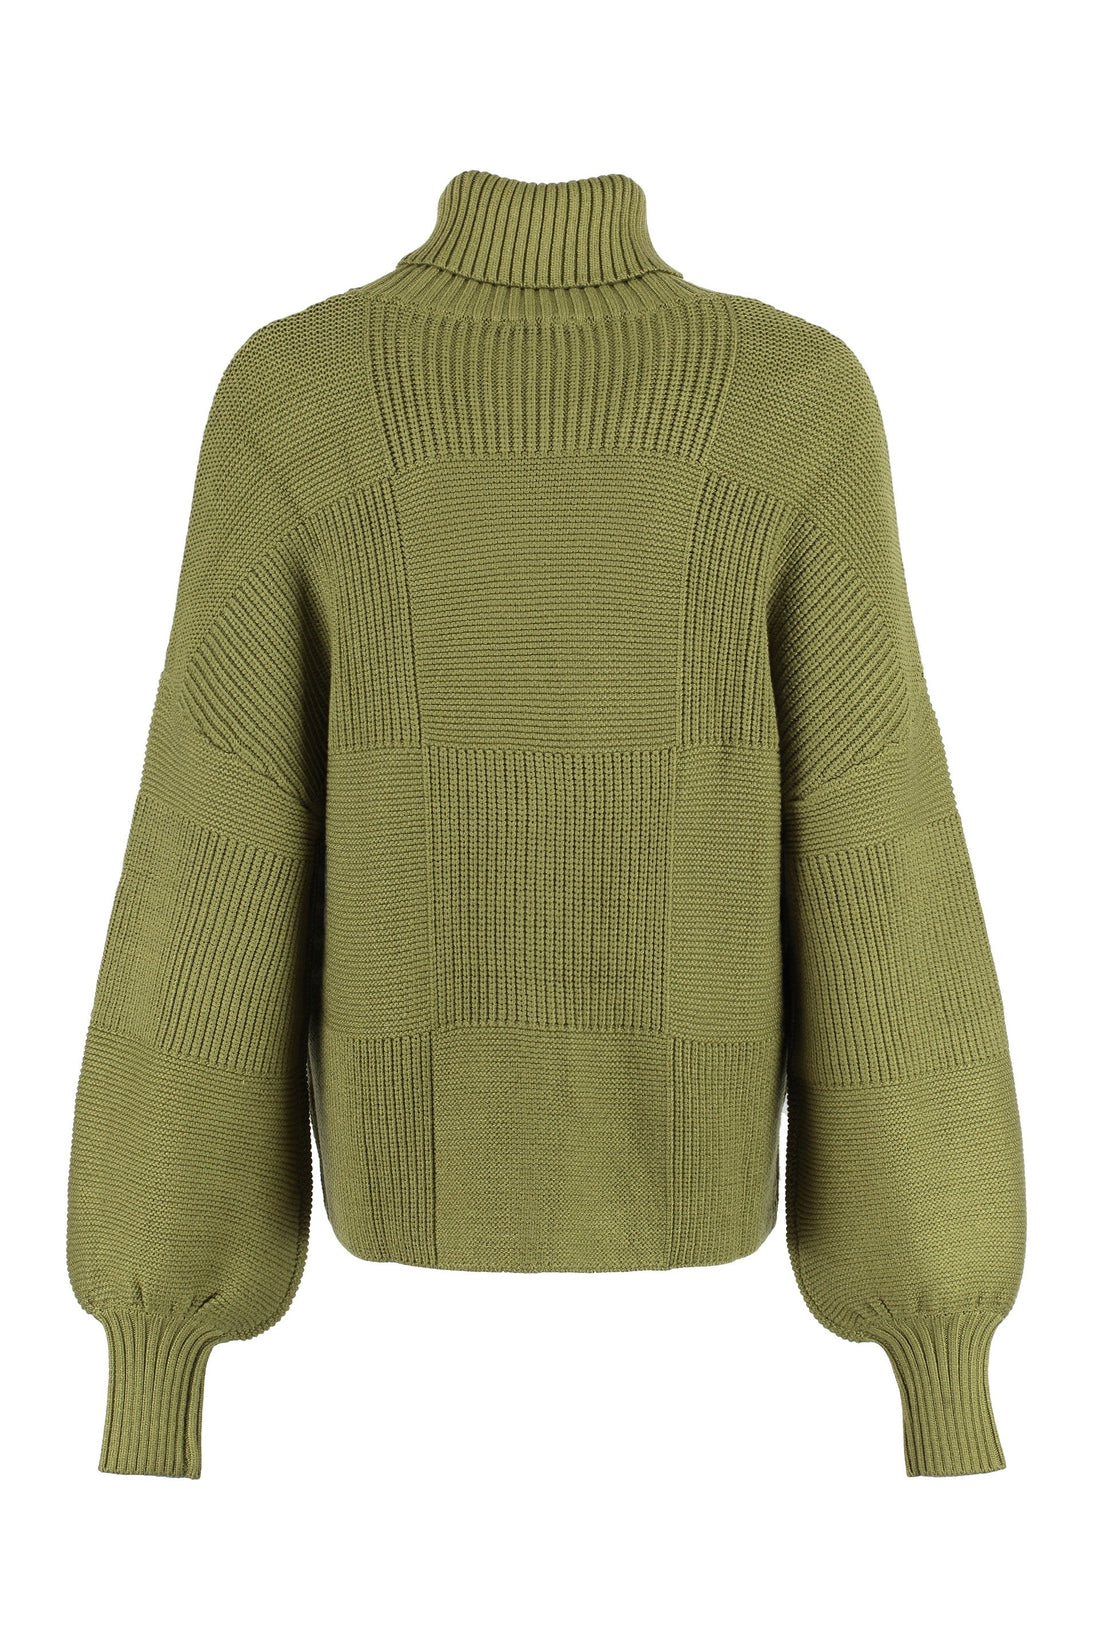 STAUD-OUTLET-SALE-Benny turtleneck sweater-ARCHIVIST